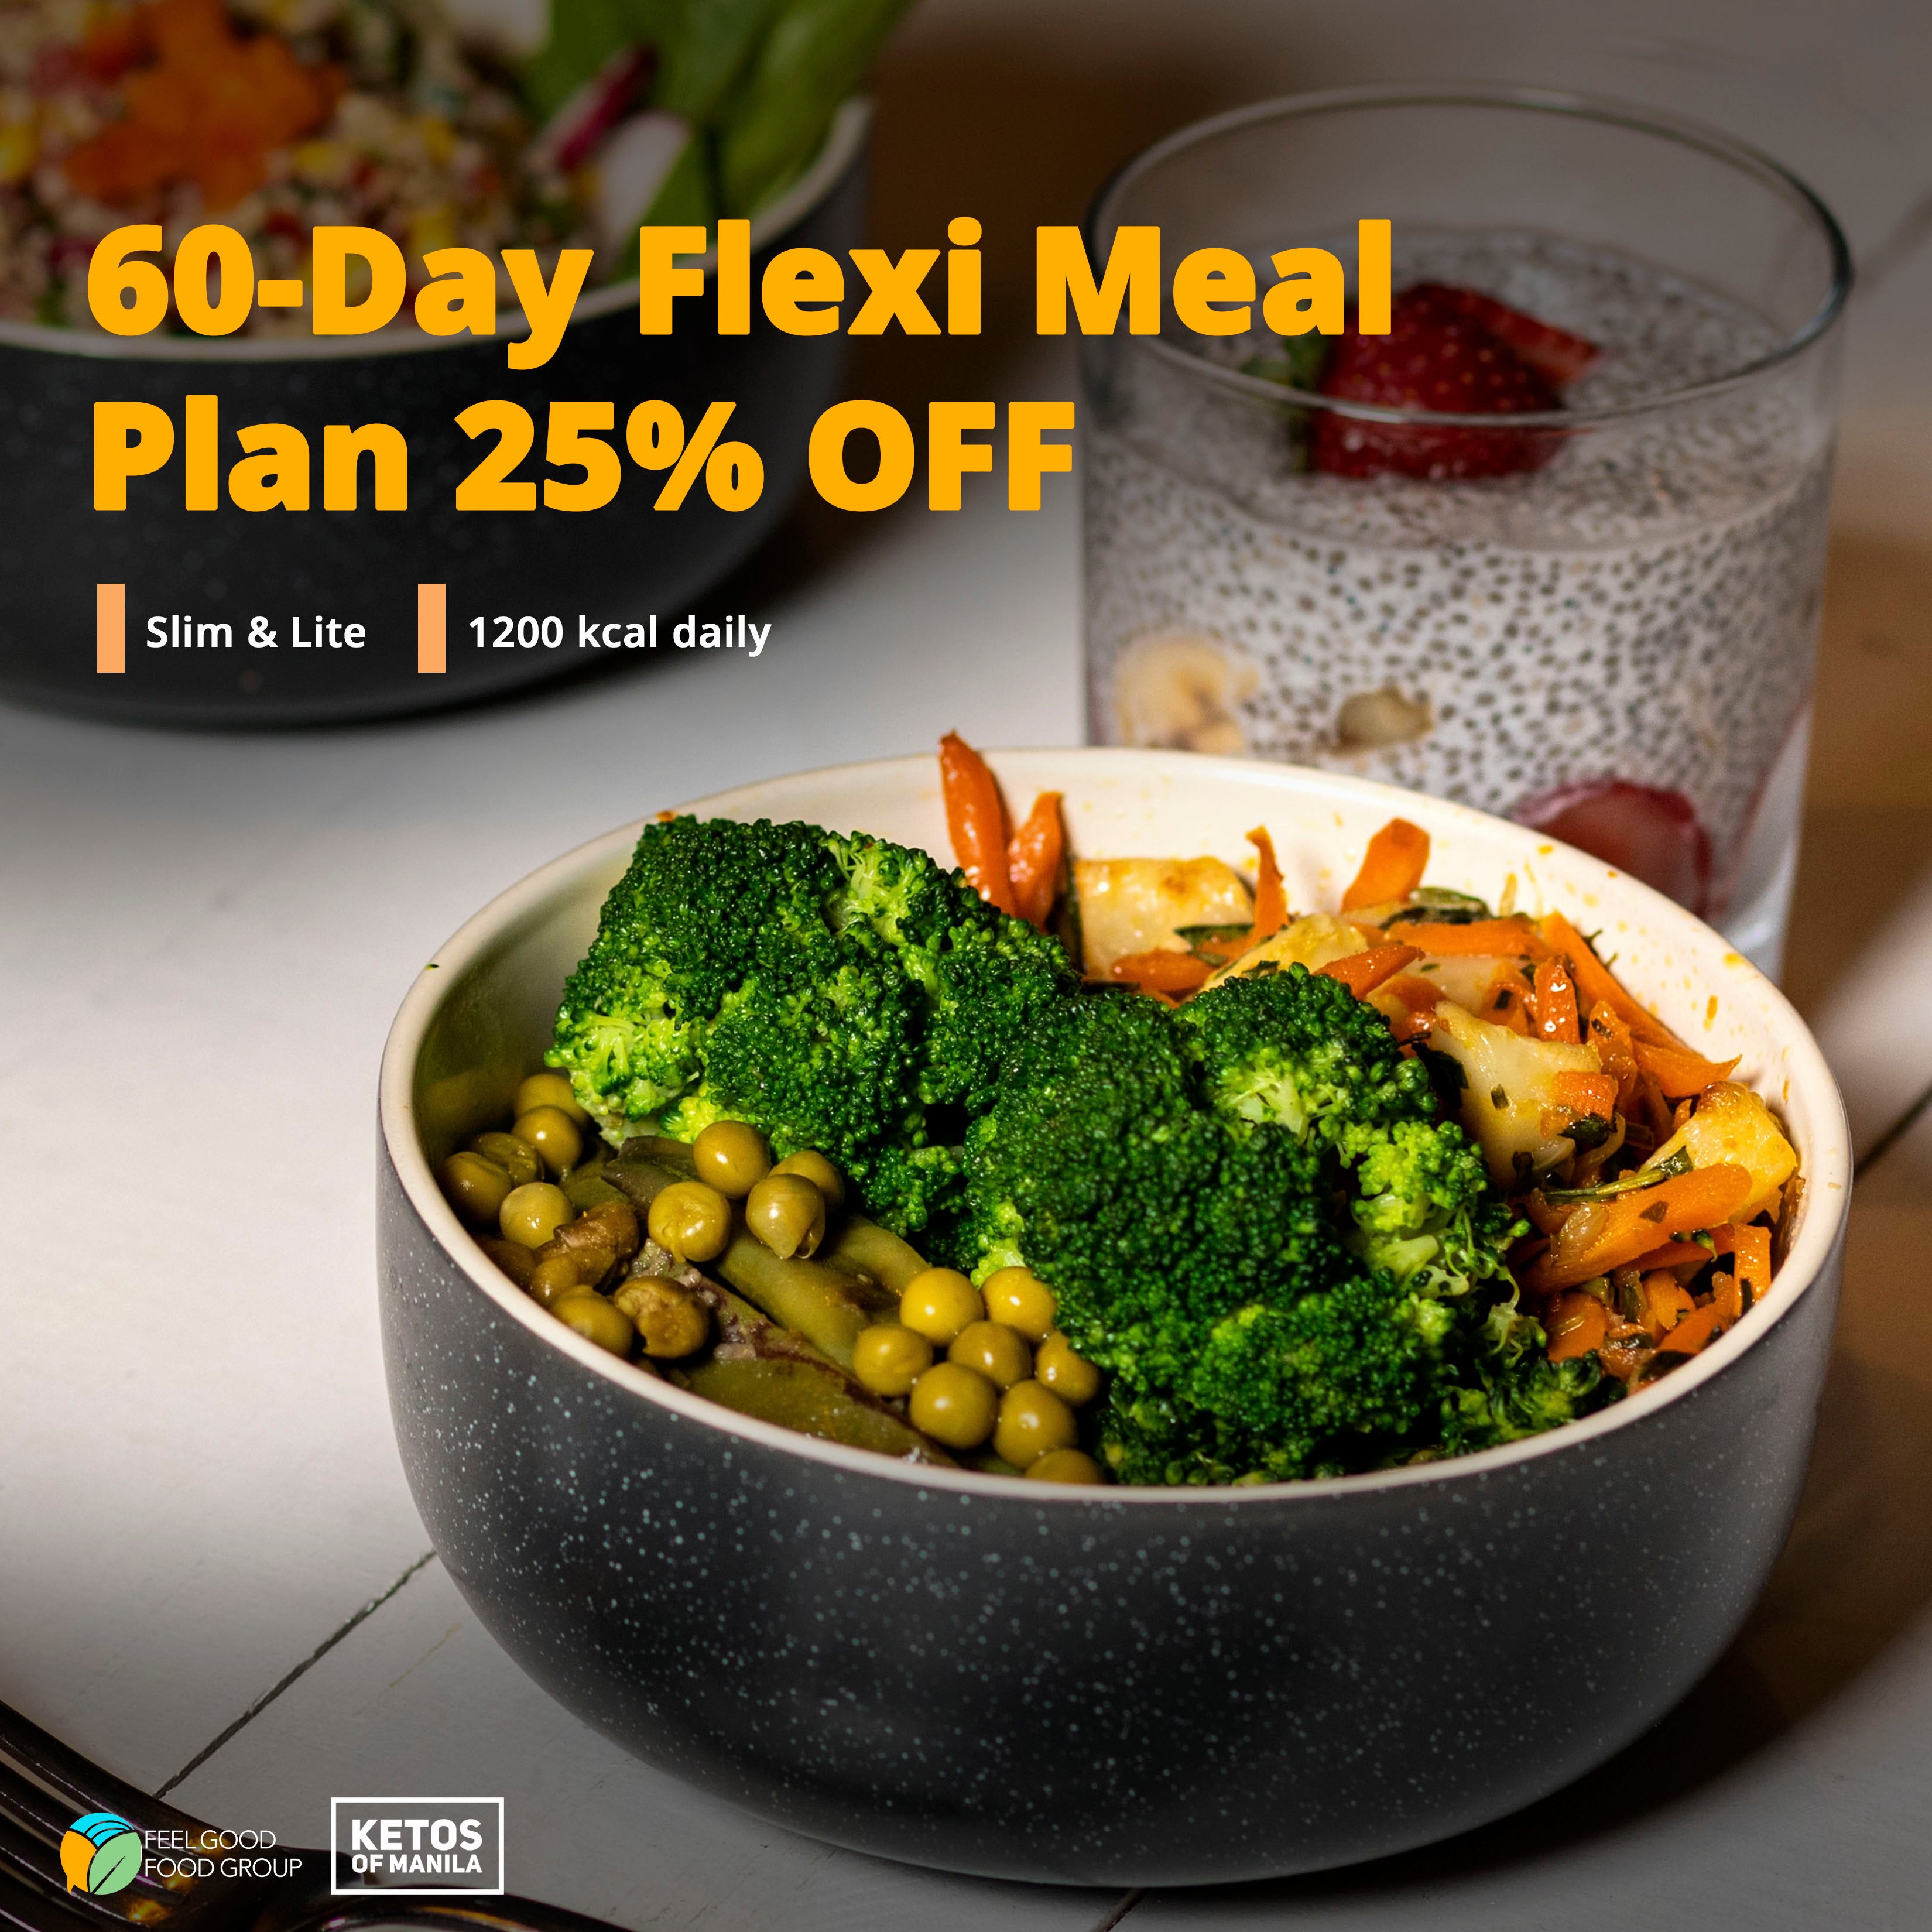 60-Day Flexi Meal Plan